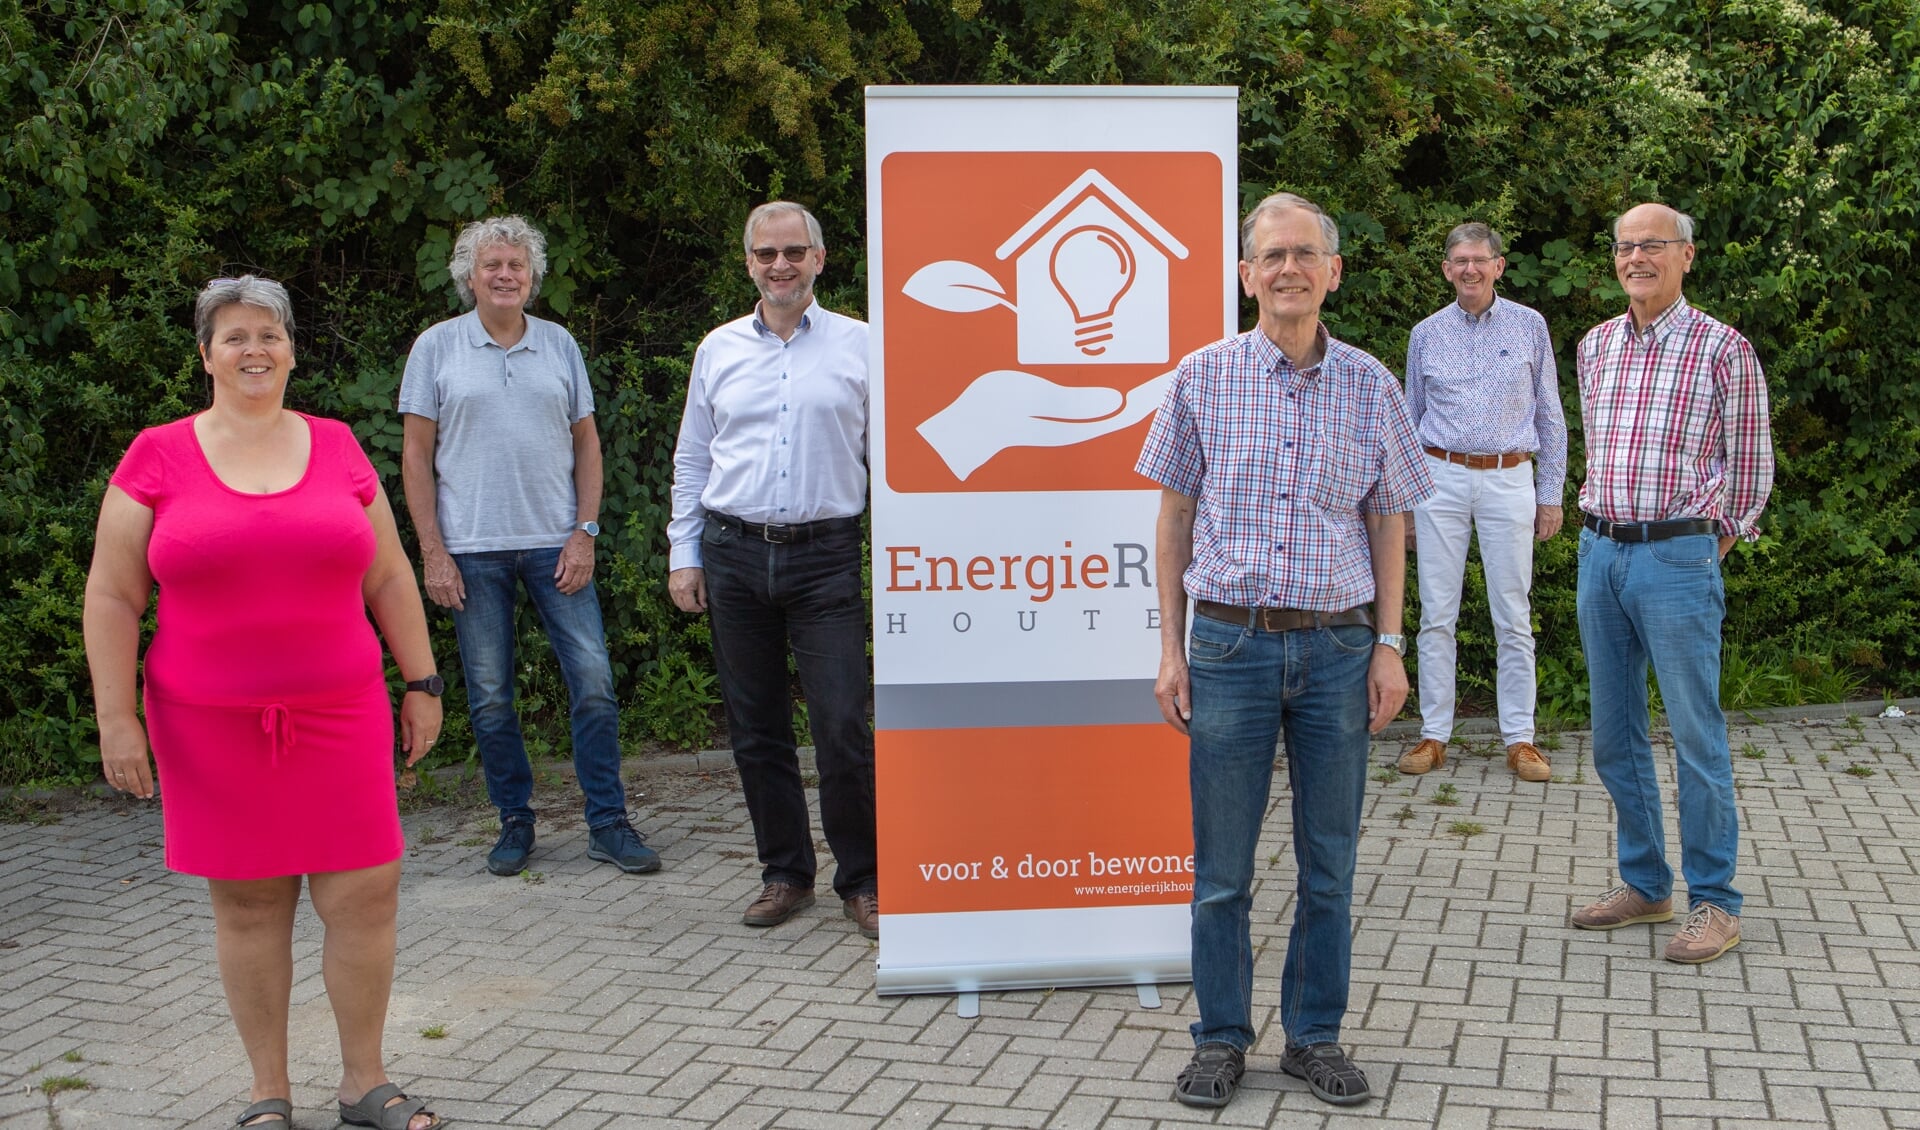 Zes van de Houtense energieambassadeurs van het EnergieBespaarCafé  v.l.n.r. Jessica, Ad, Roelof, Geert, Frans en Hans